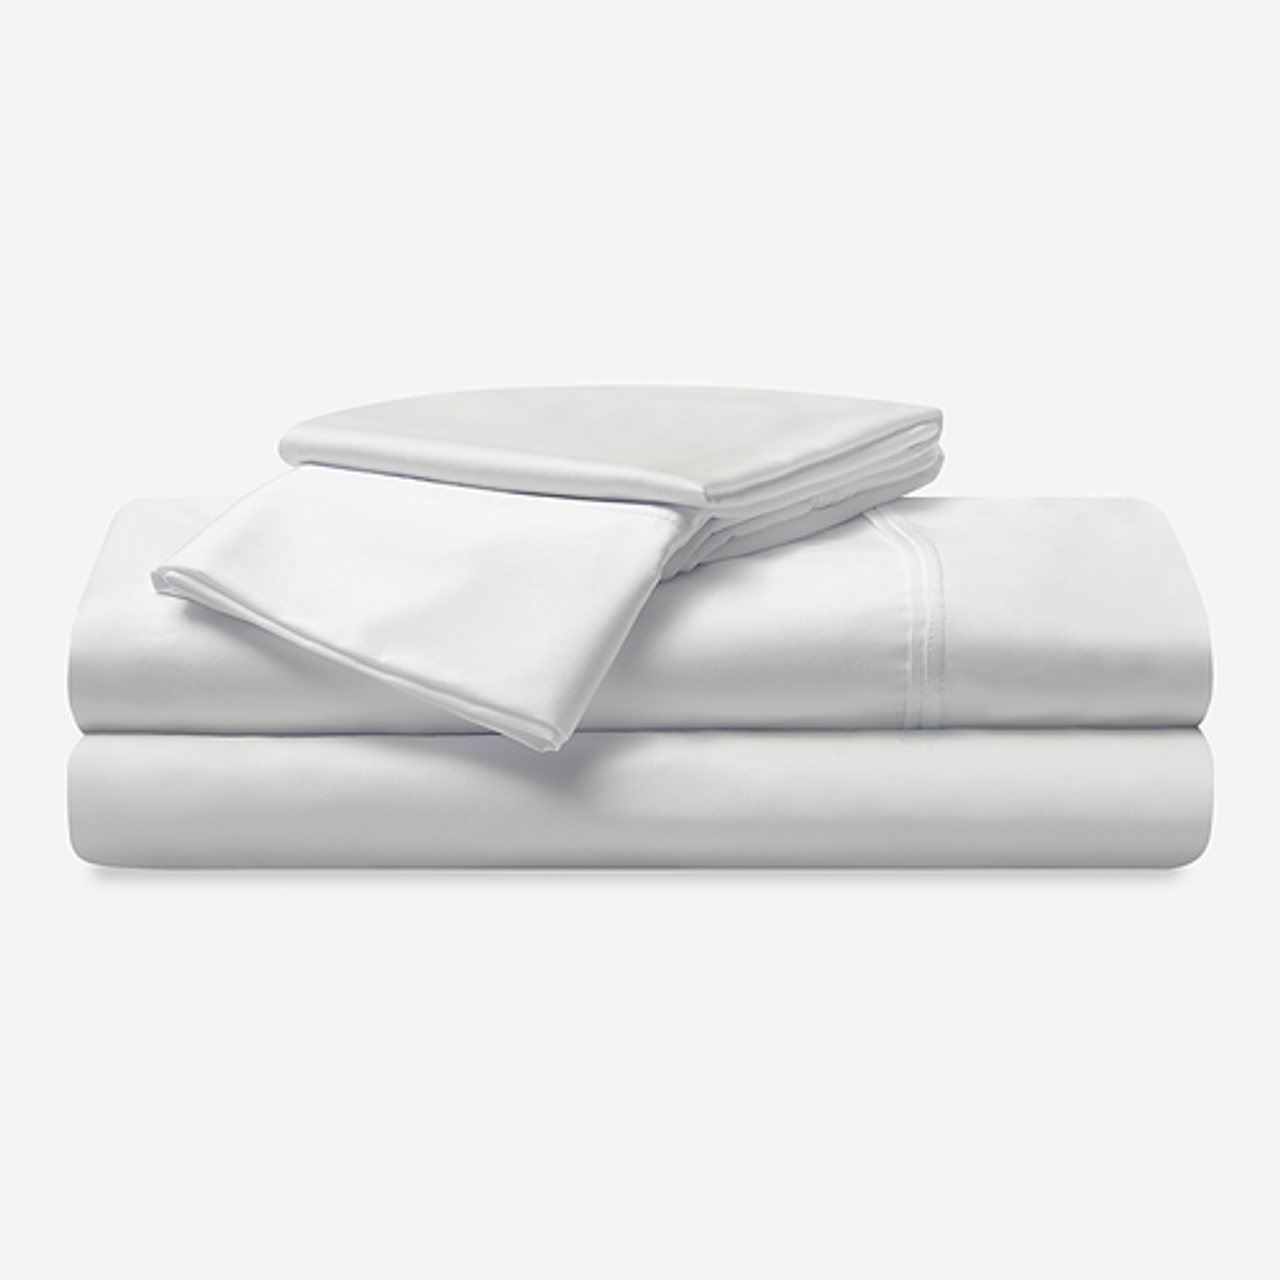 Bedgear - Dri-Tec Moisture-Wicking Sheet Sets - Full - White